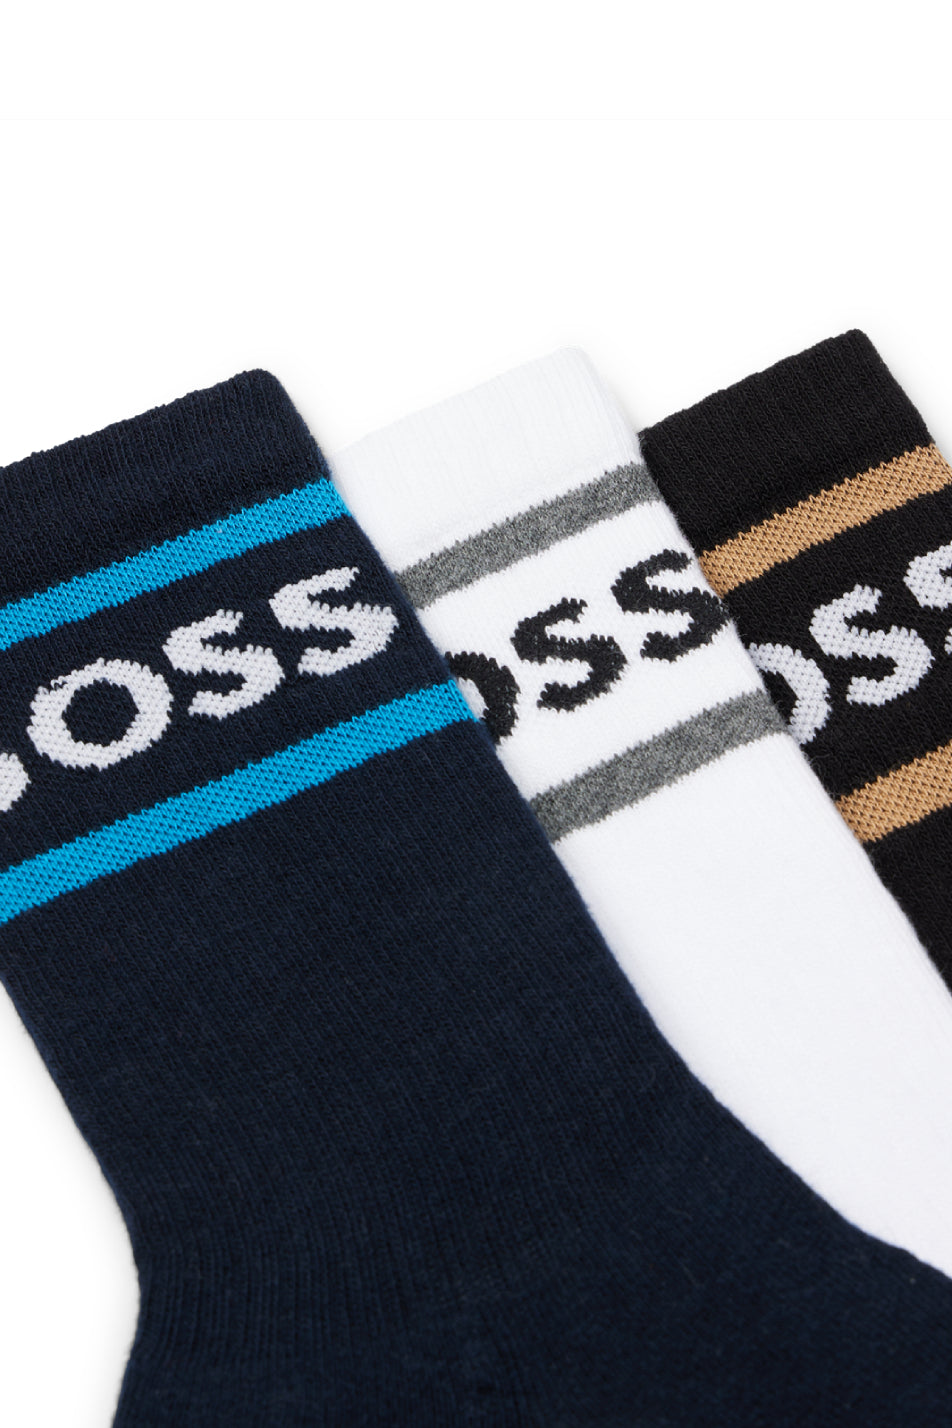 Boss 3 Pack Rib Stripe Sock